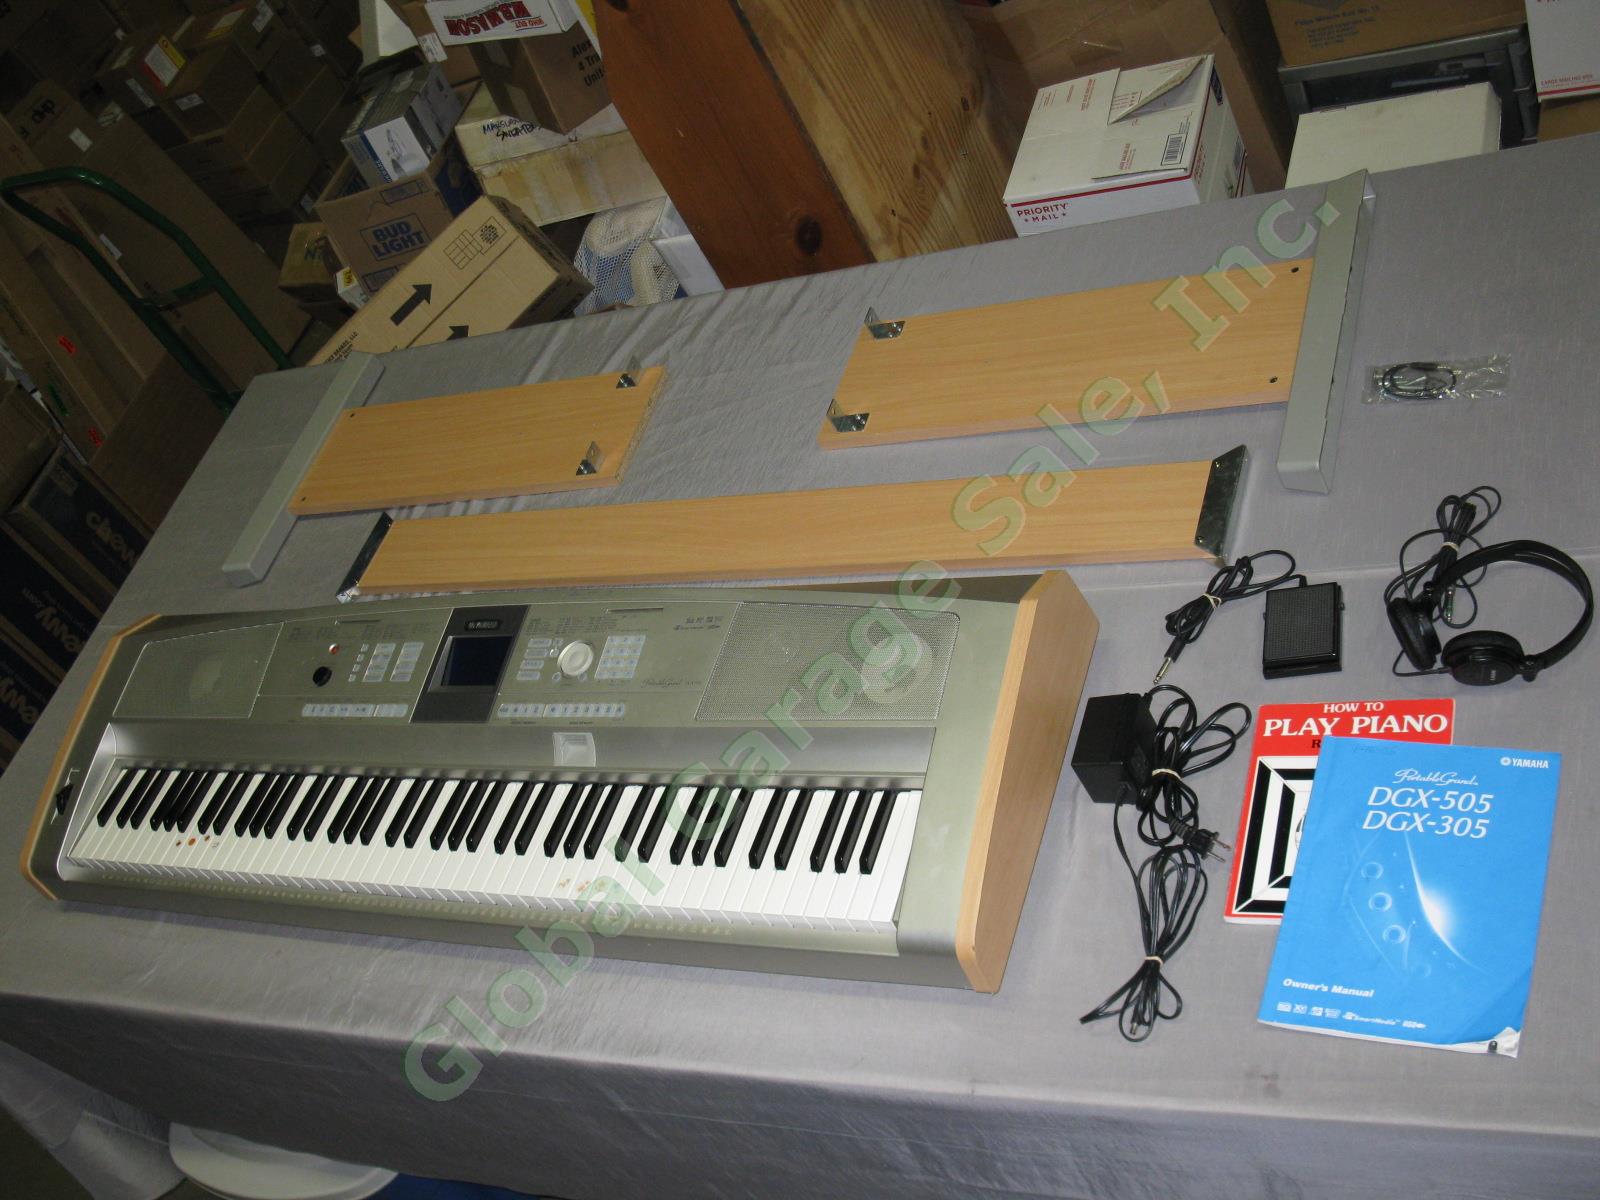 PICKUP ONLY Yamaha DGX-505 Portable Grand Piano Keyboard W/ Stand Power Supply +